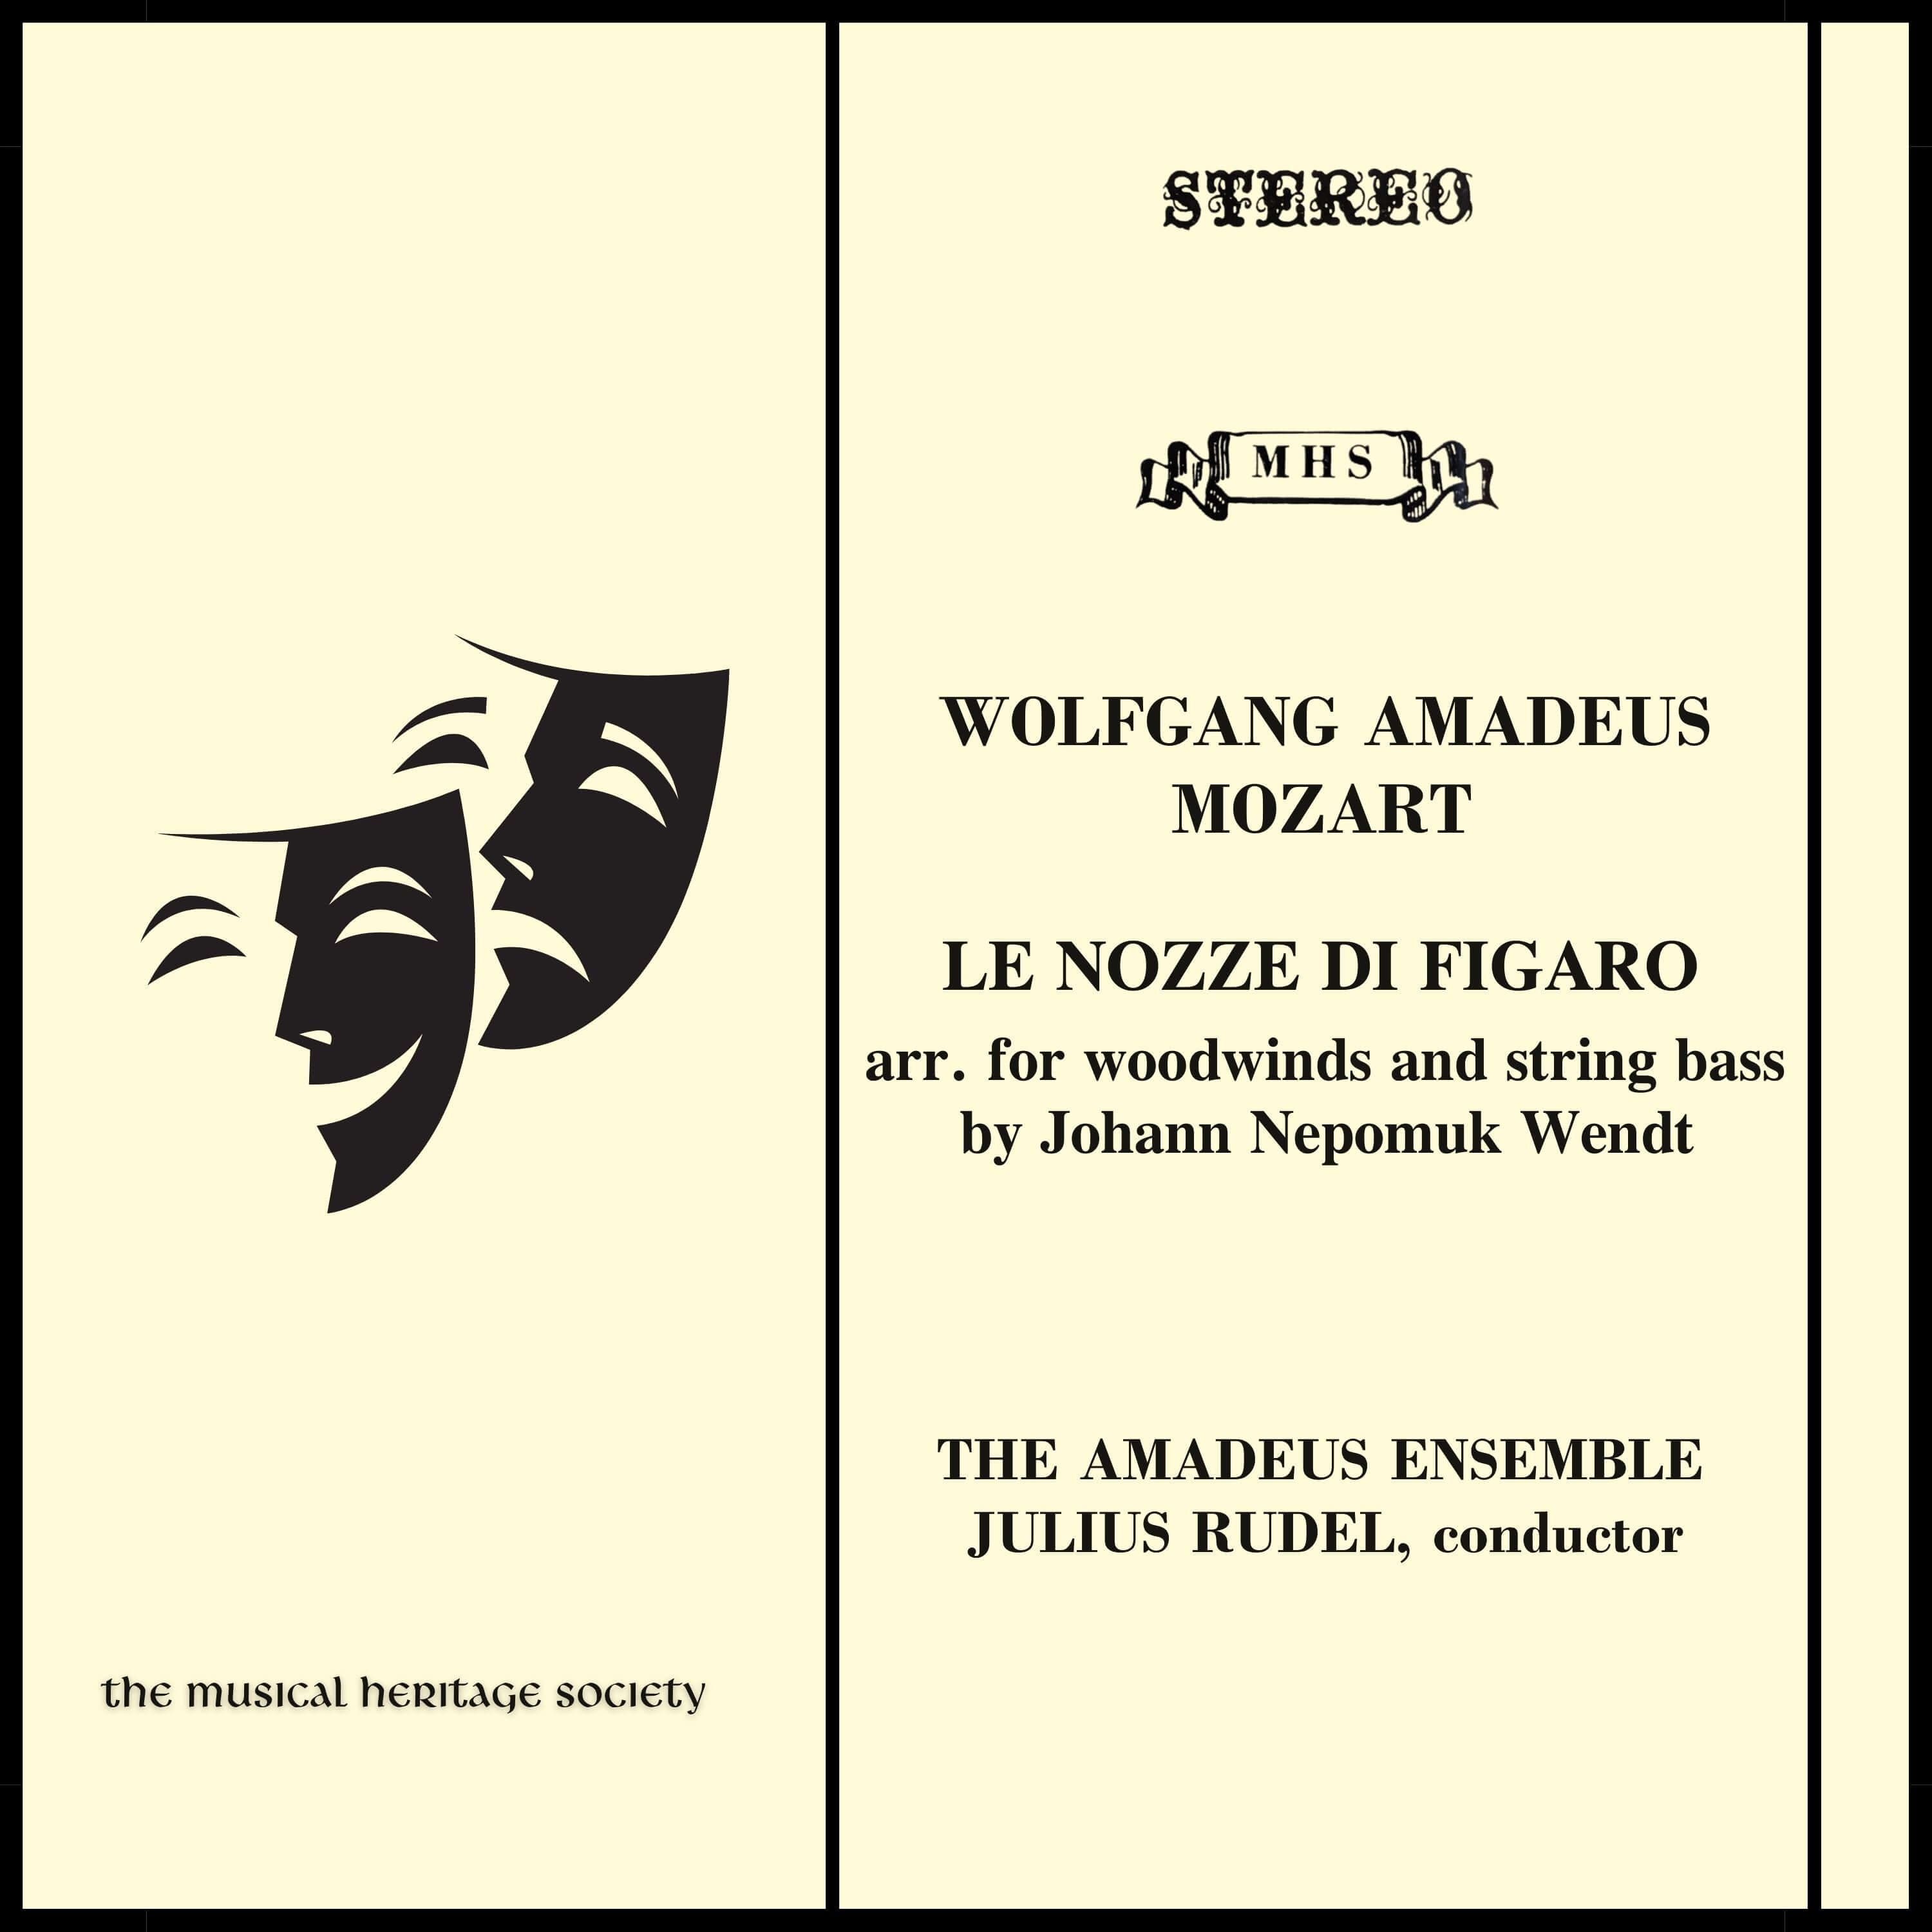 MOZART: LE NOZZE DI FIGARO (THE MARRIAGE OF FIGARO) arr. for woodwinds - AMADEUS ENSEMBLE, JULIUS RUDEL